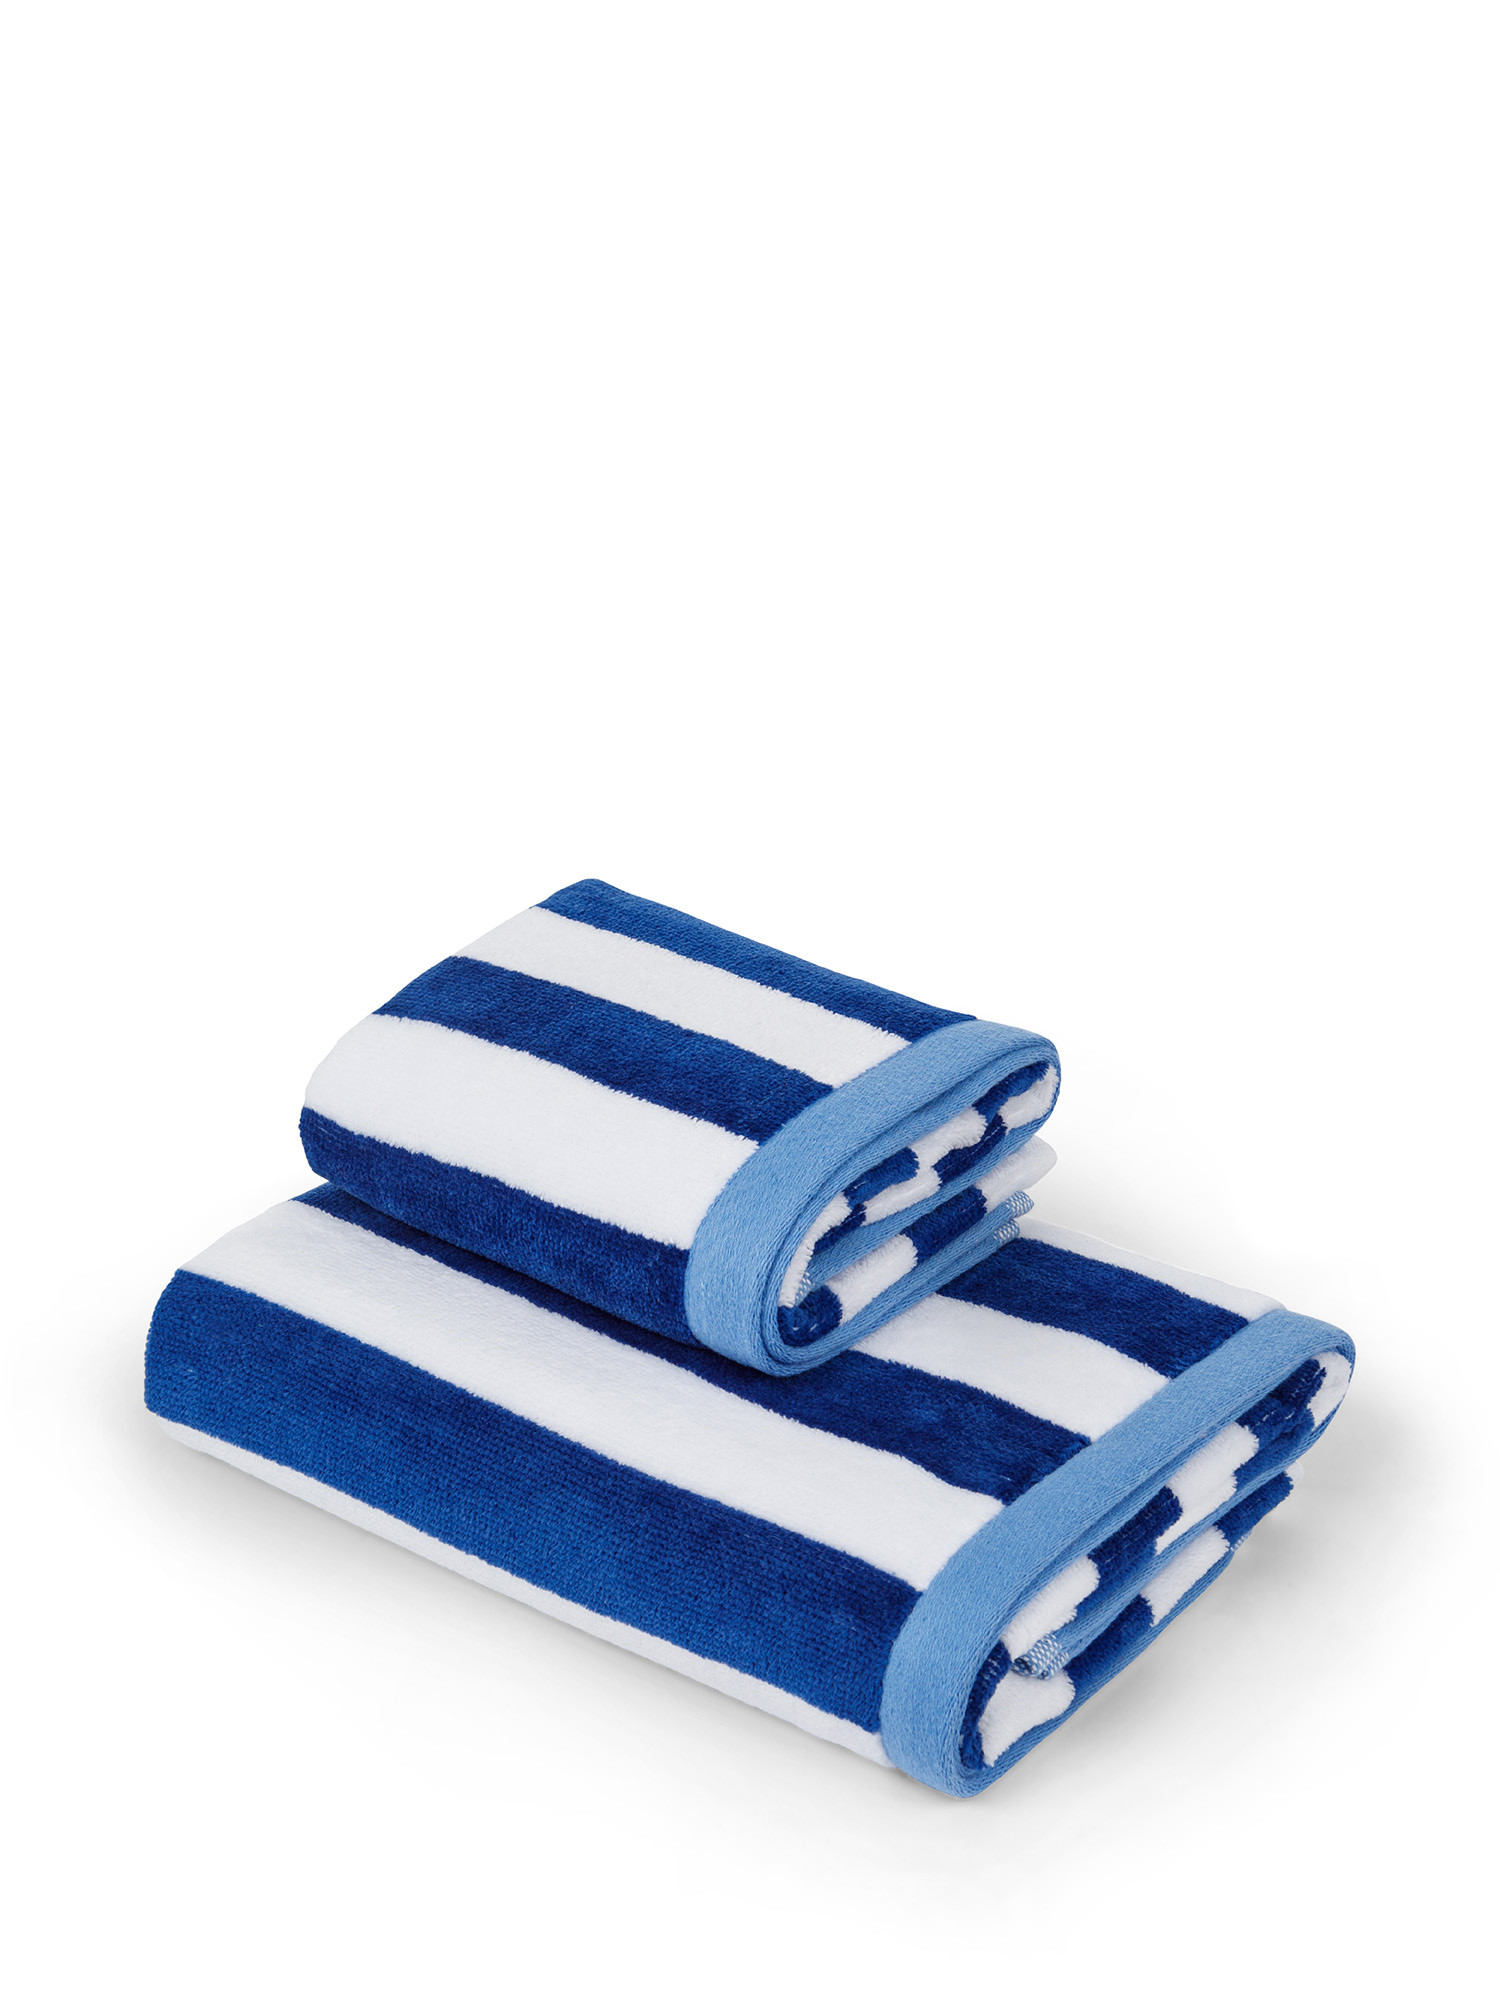 Asciugamano cotone velour motivo righe marinare, Blu, large image number 0